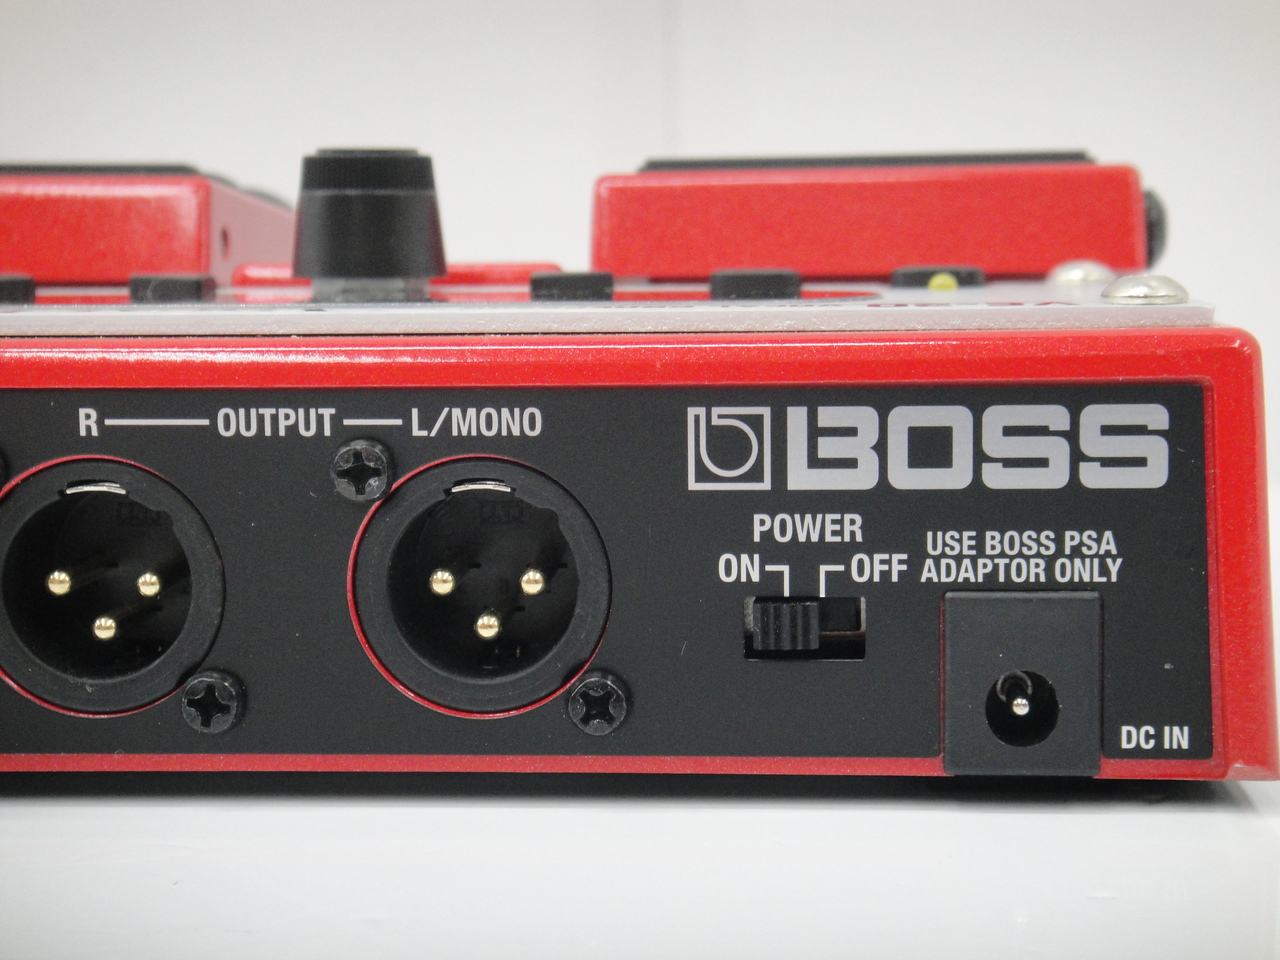 BOSS VE-20 VOCAL PROCESSOR（中古/送料無料）【楽器検索デジマート】